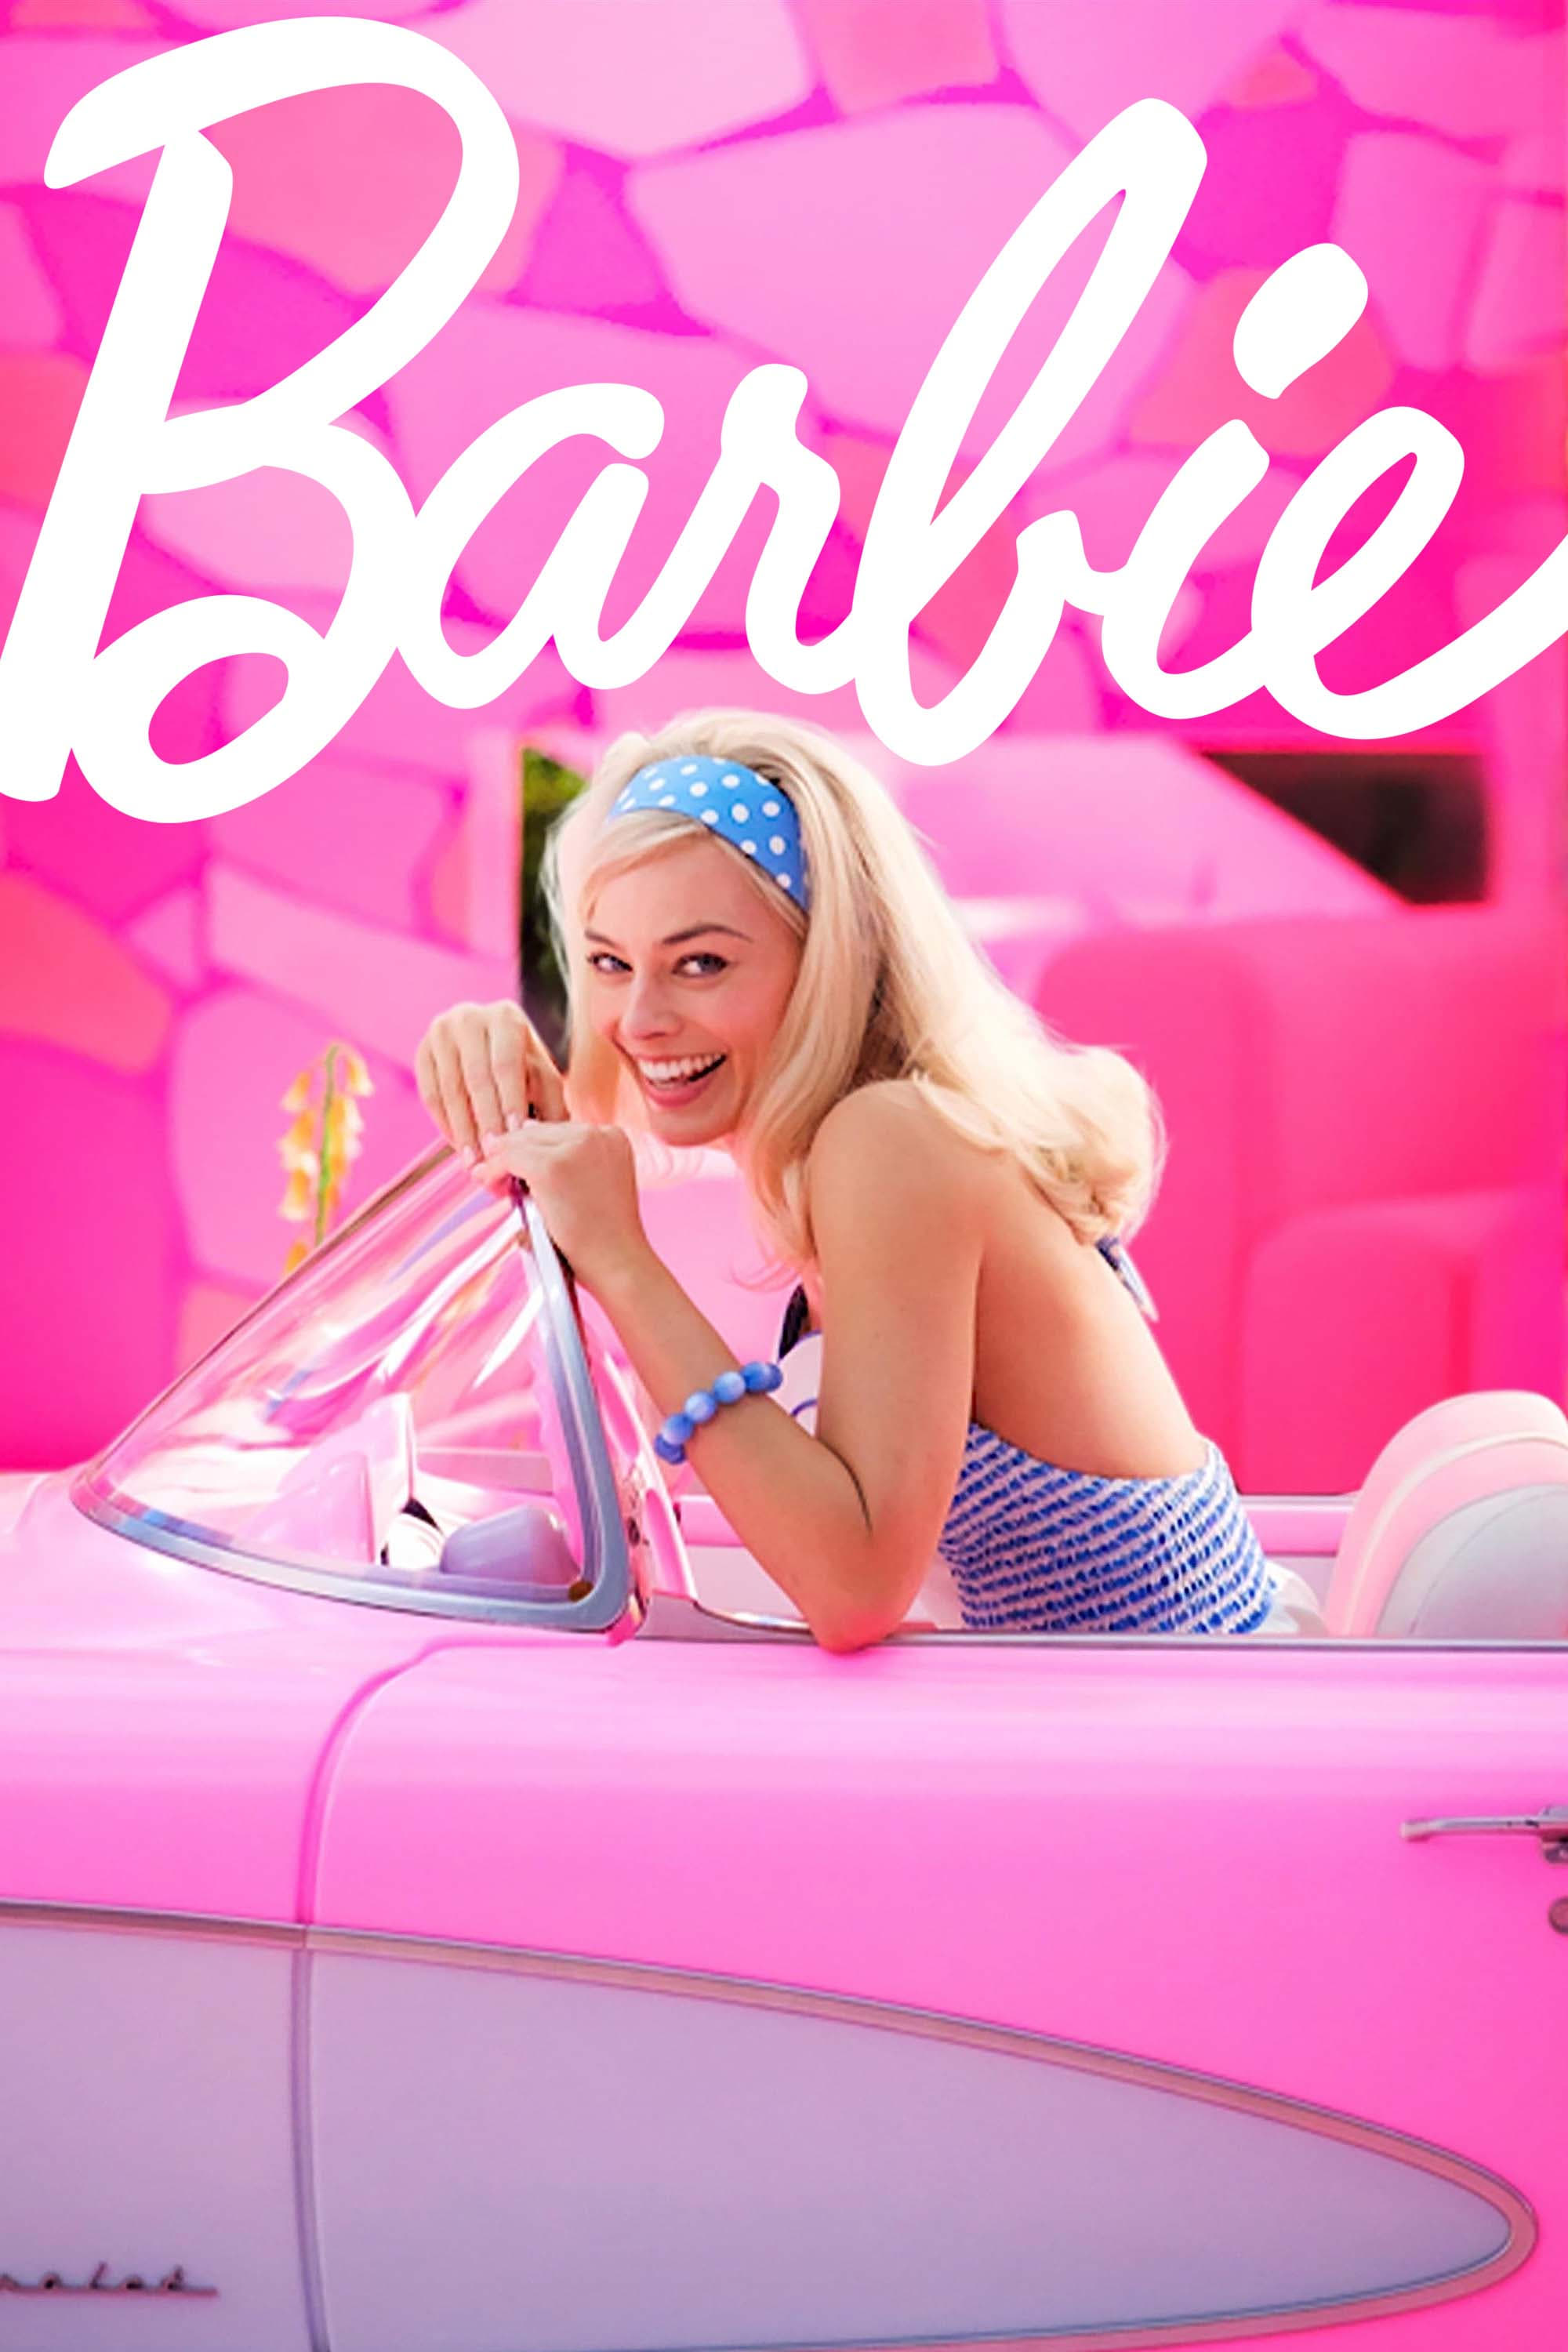 affiche du film Barbie